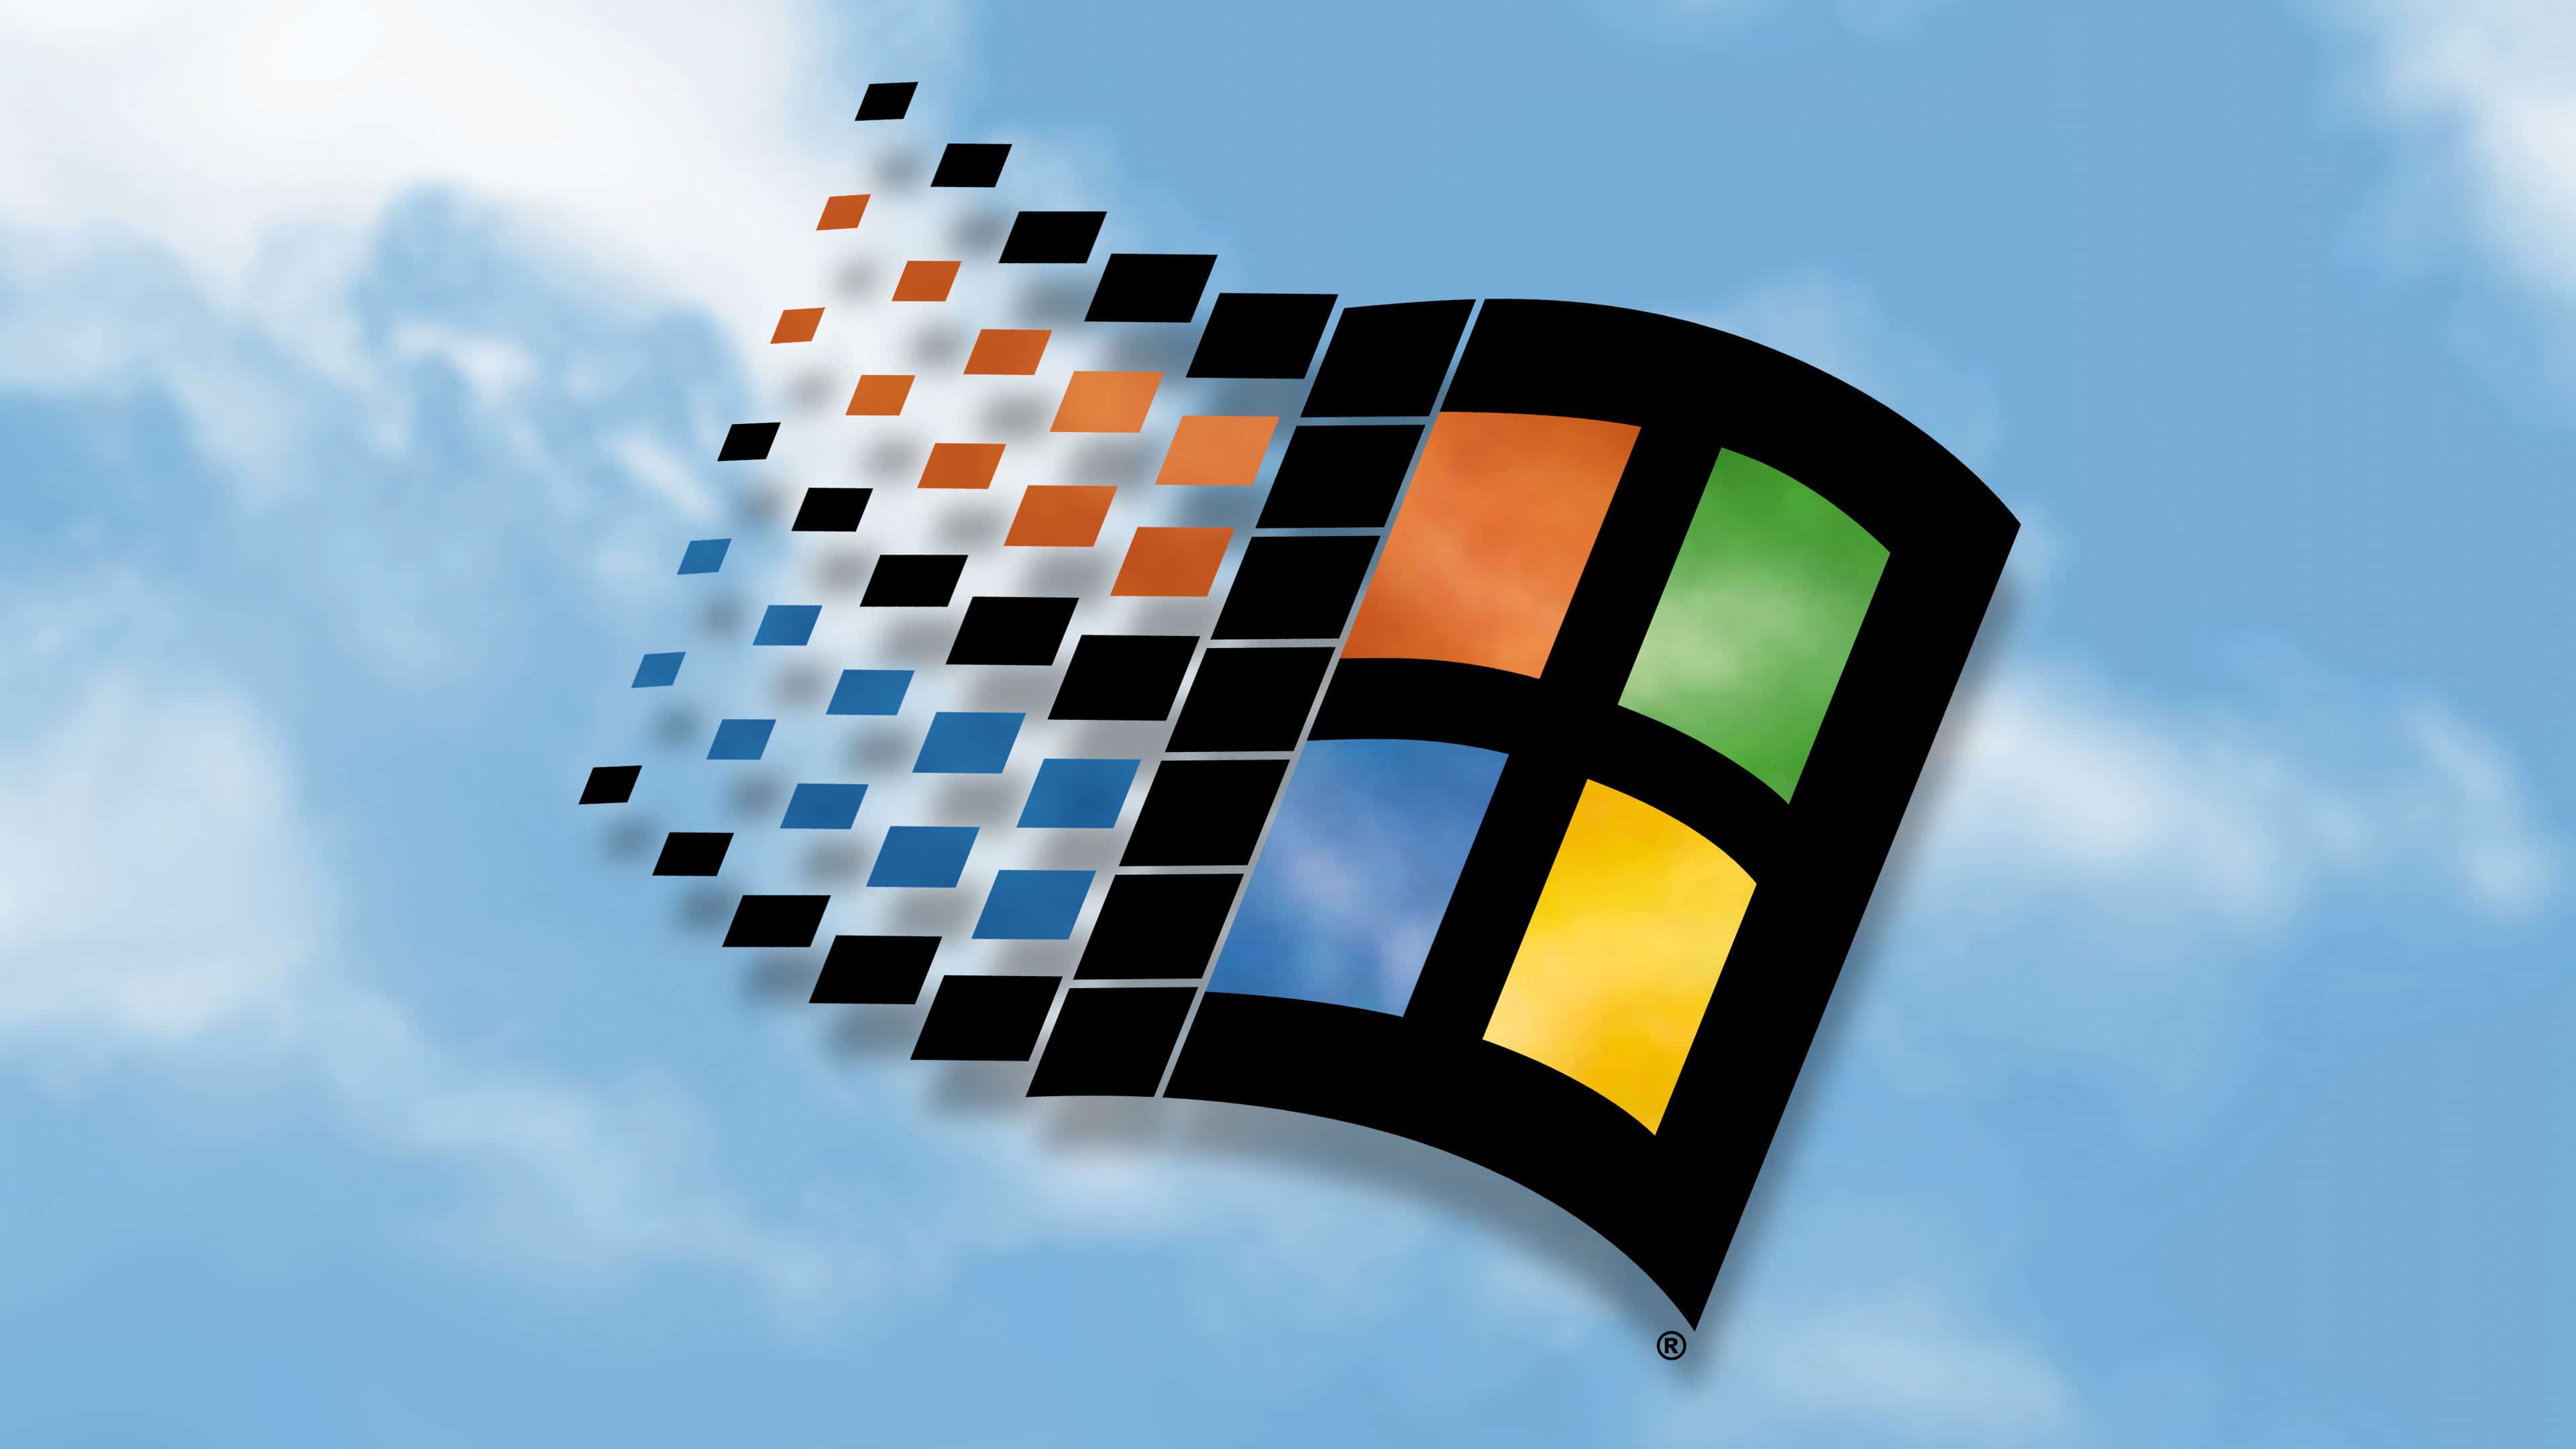 Windows 98 Logo - Windows 98 Logo UHD 4K Wallpaper